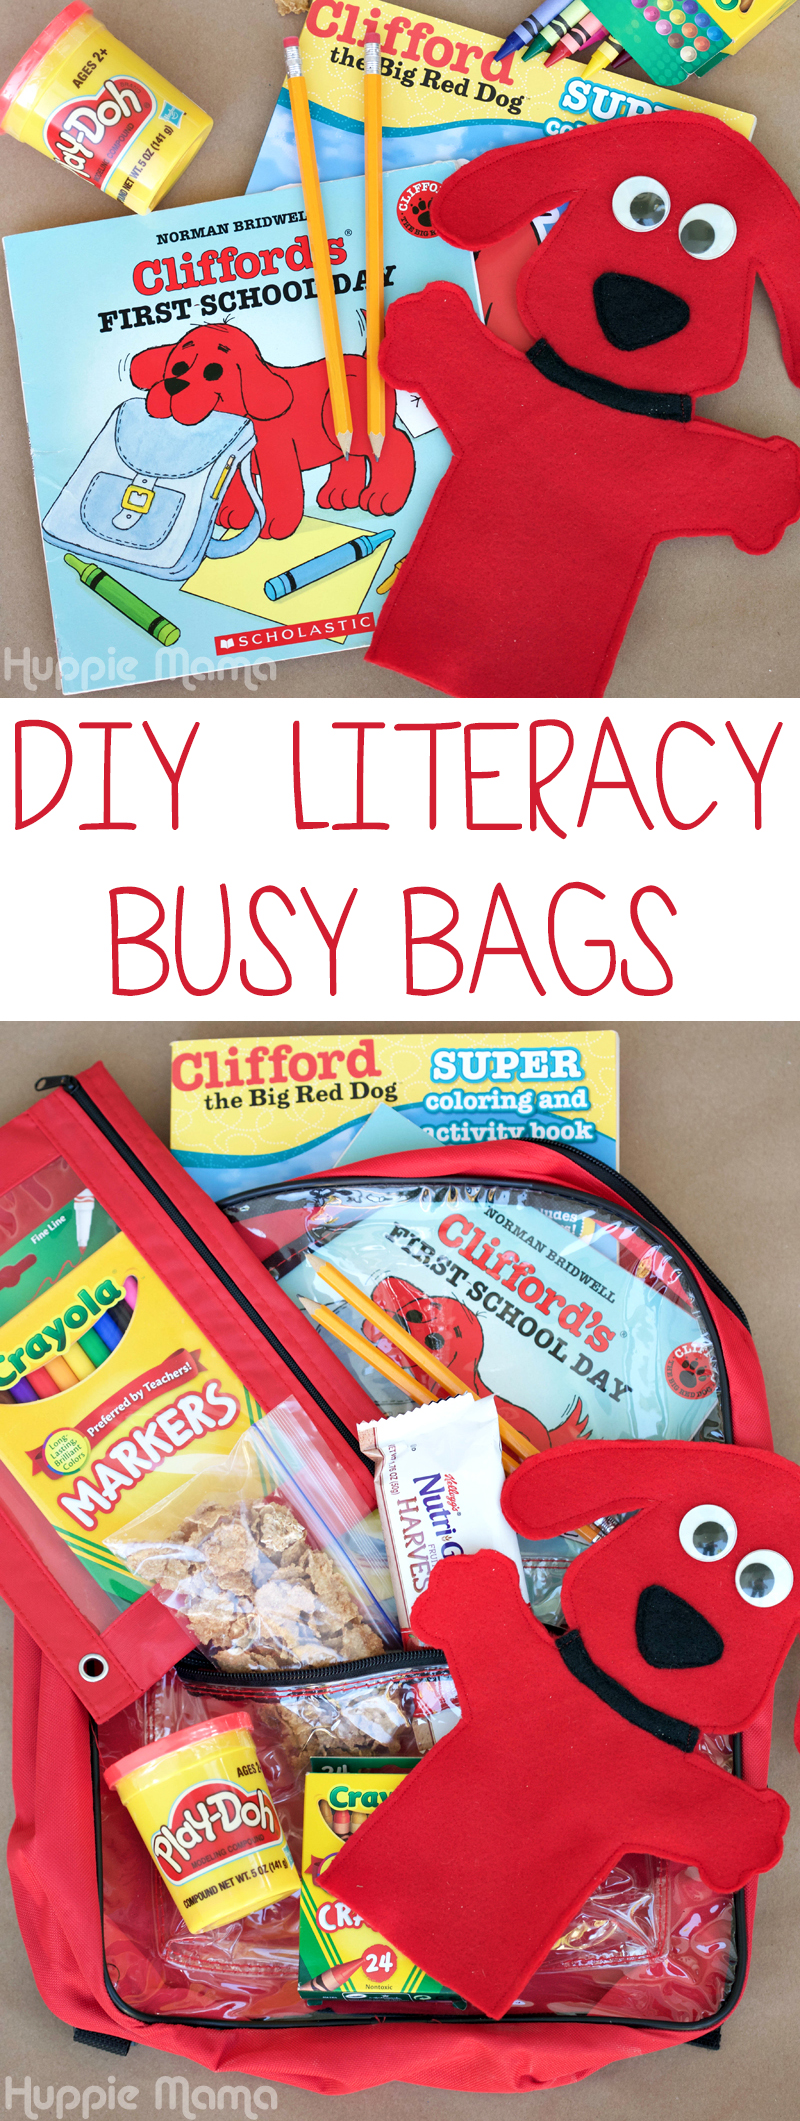 DIY Literacy Busy Bags